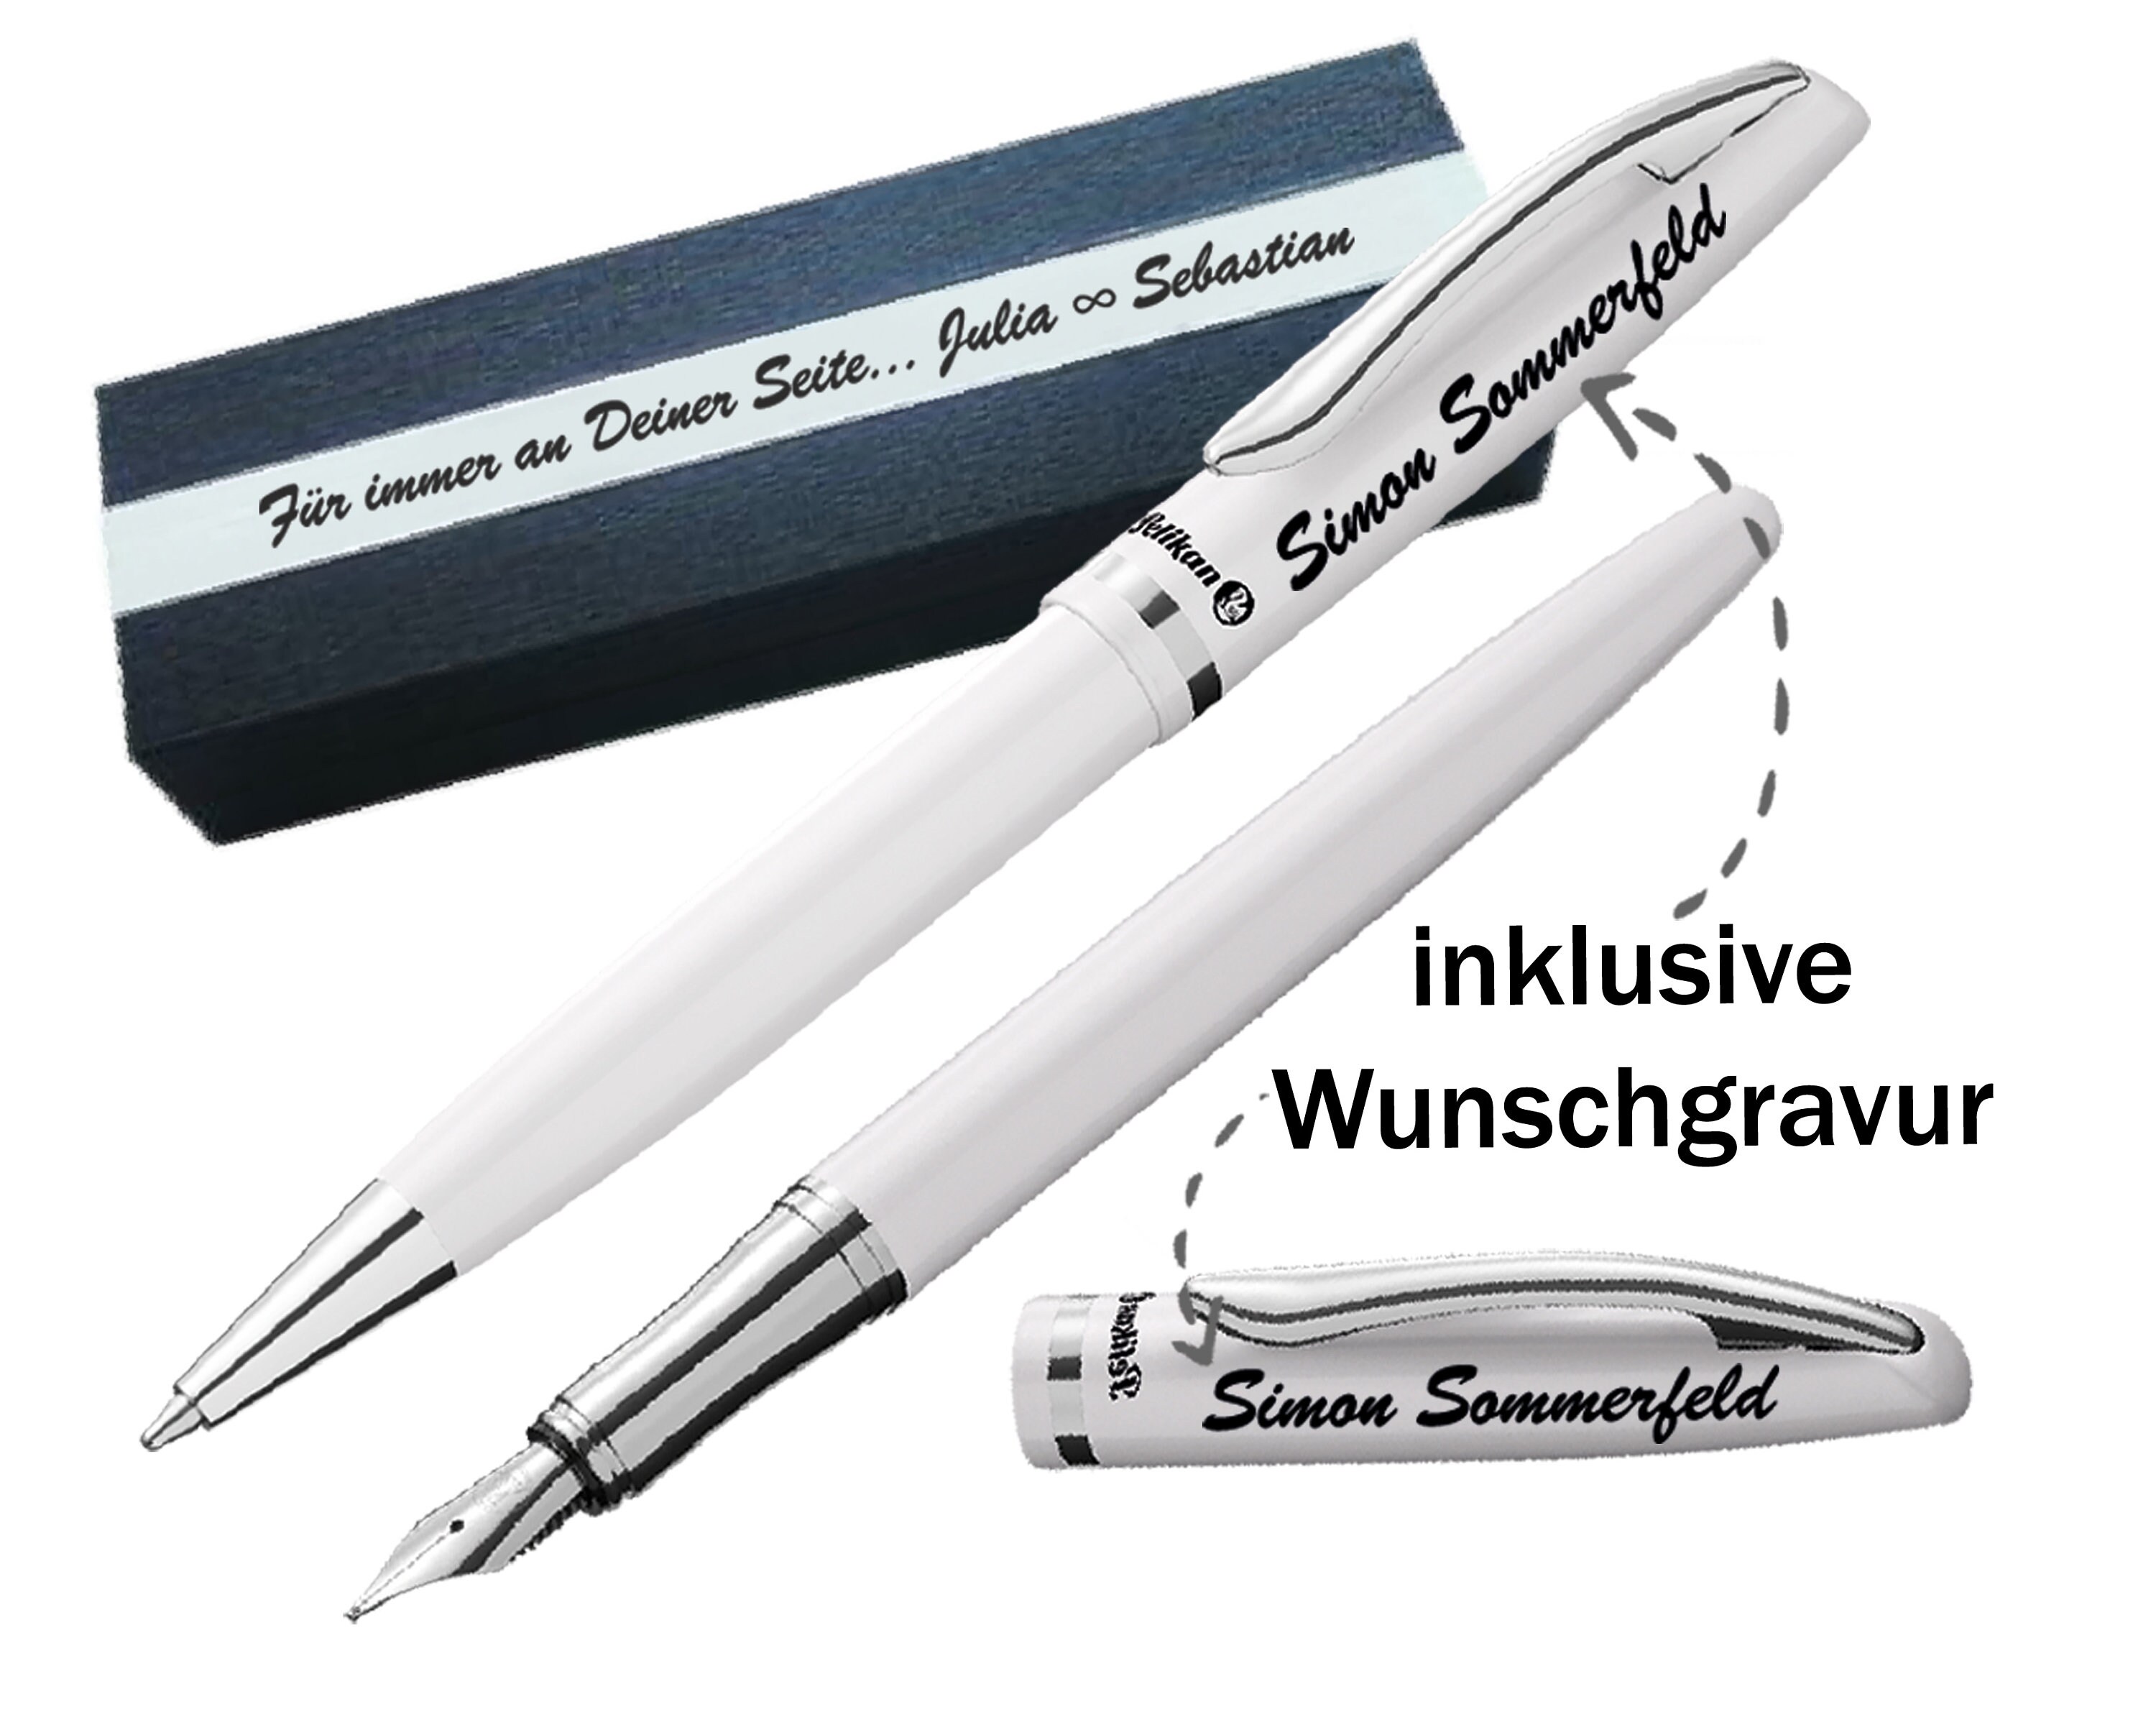 Pelikan Schreibset mit Gravur als Geschenk bestehend aus Kugelschreiber & Füller  Jazz Elegance, Geschenkbox inklusive Wunschgravur PS27Box2 - .de